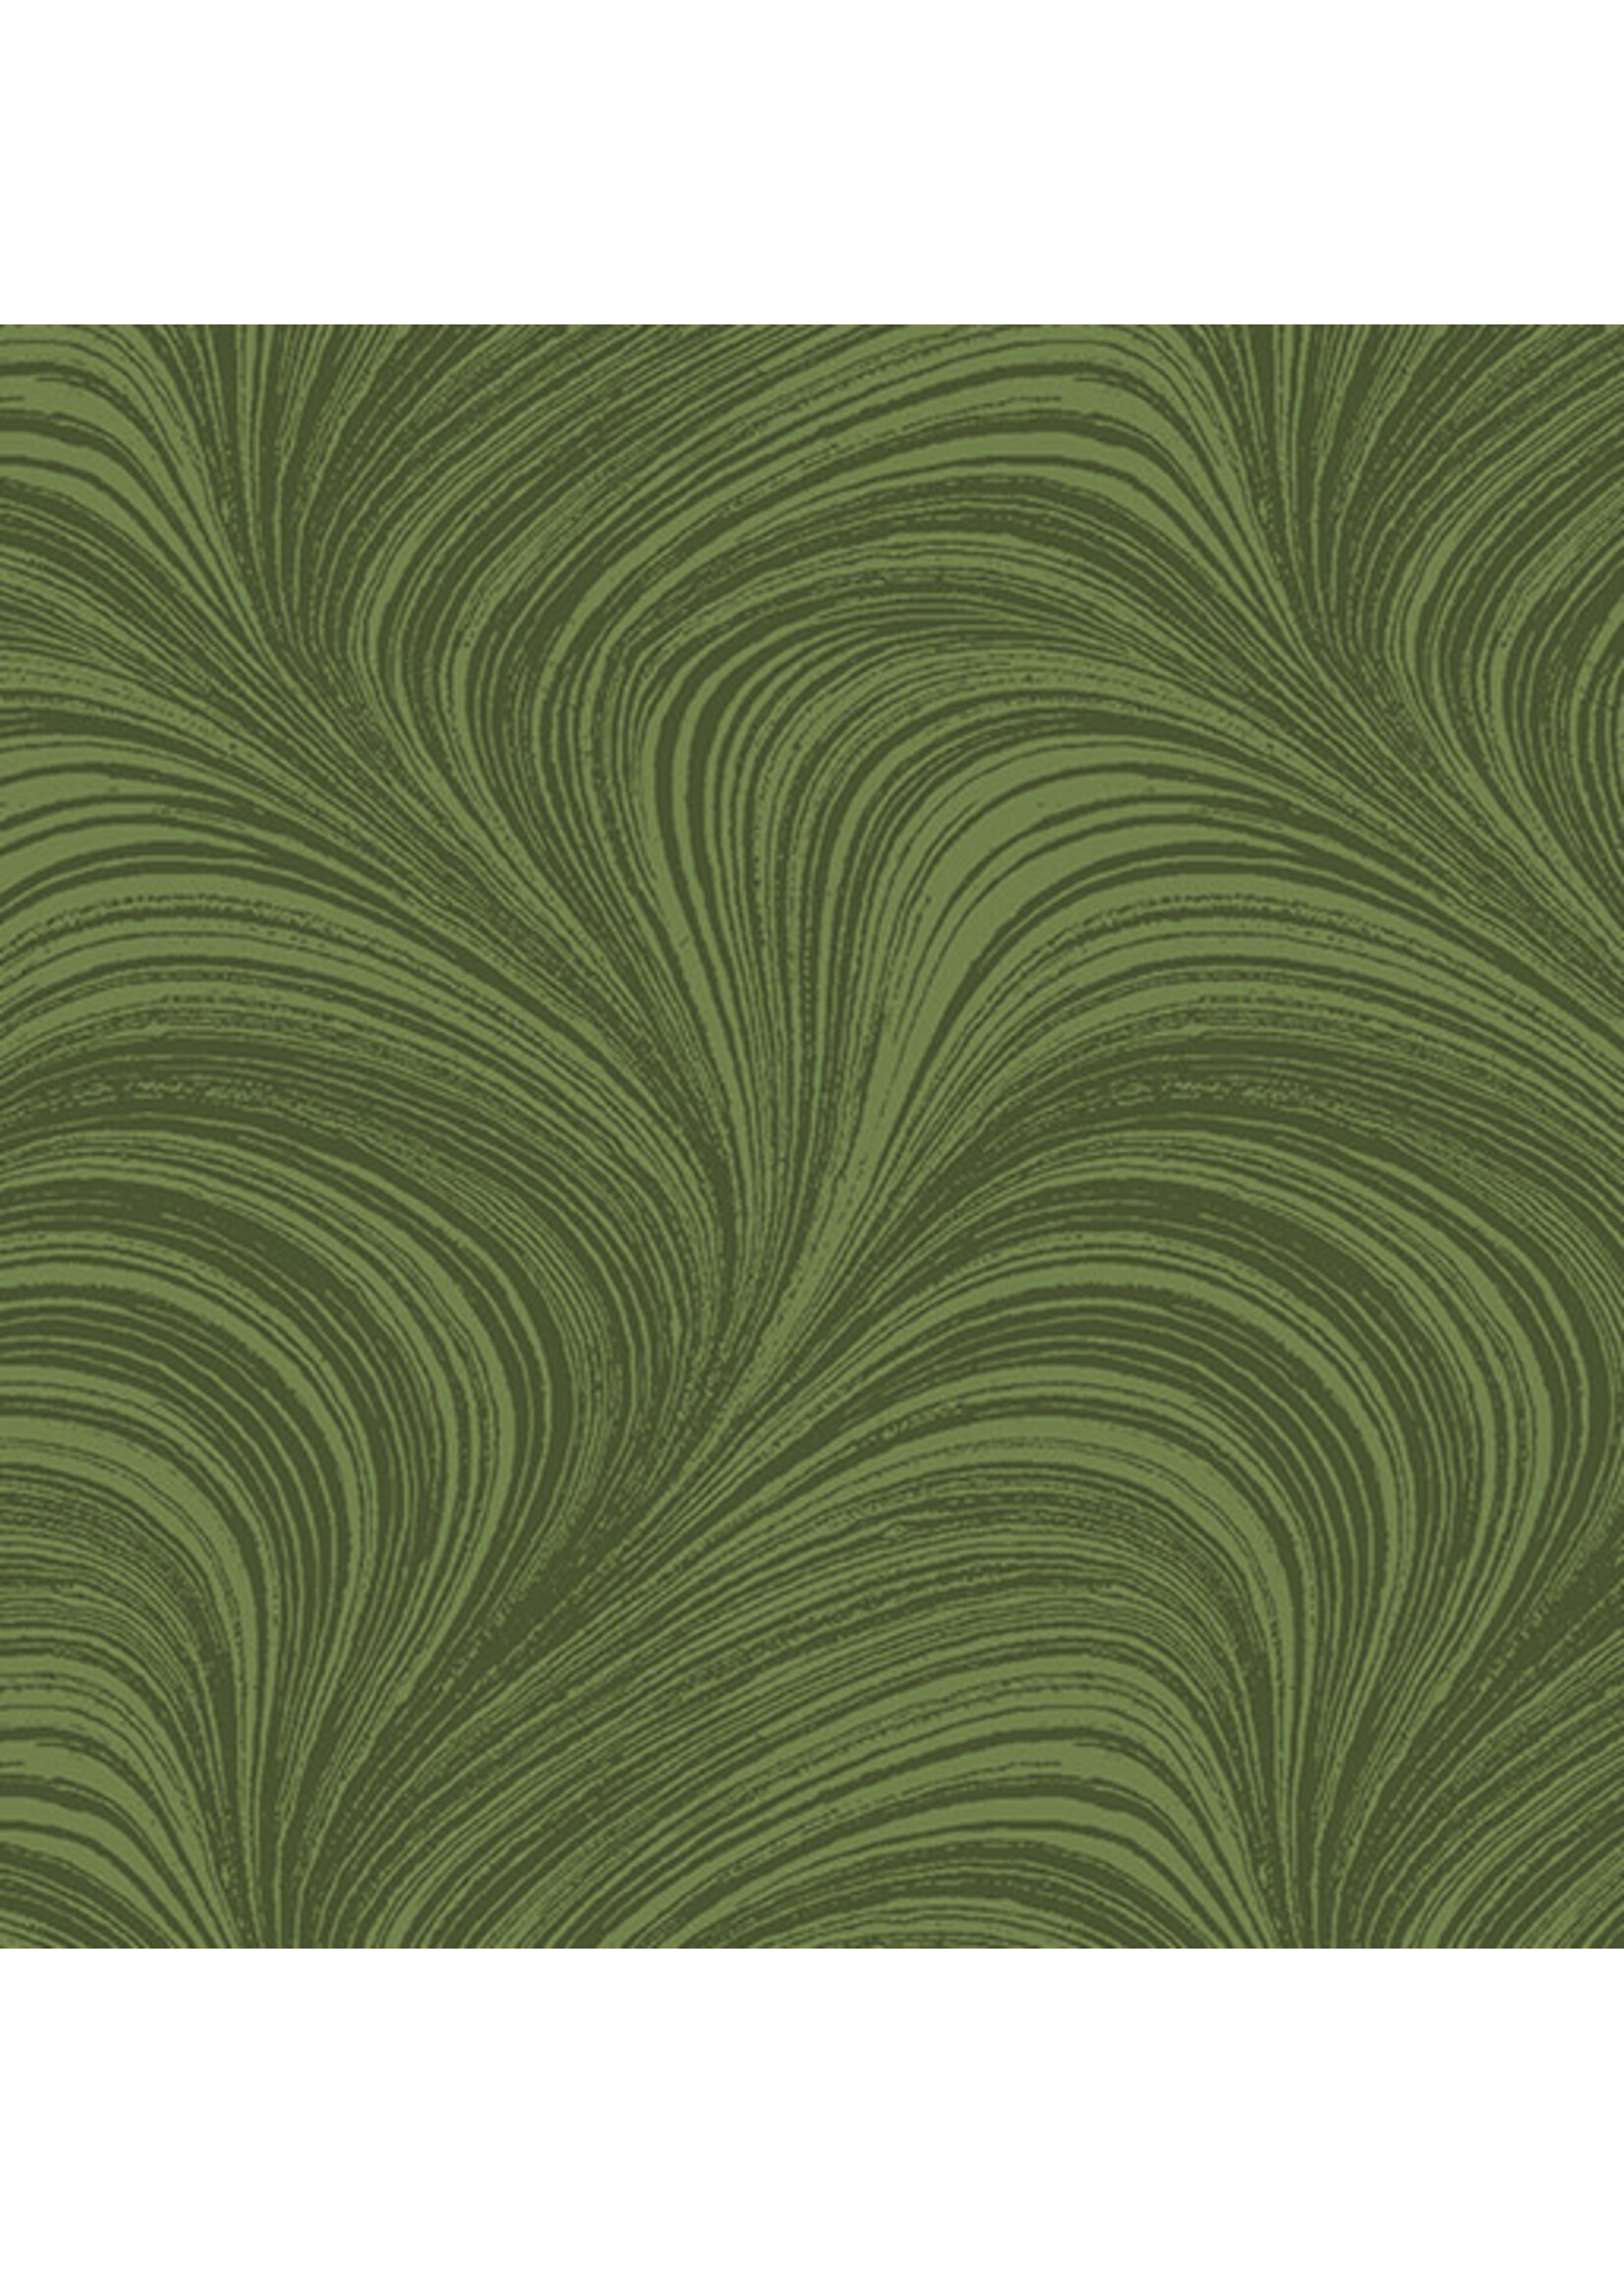 Benartex Studio Wave Texture - Medium Green